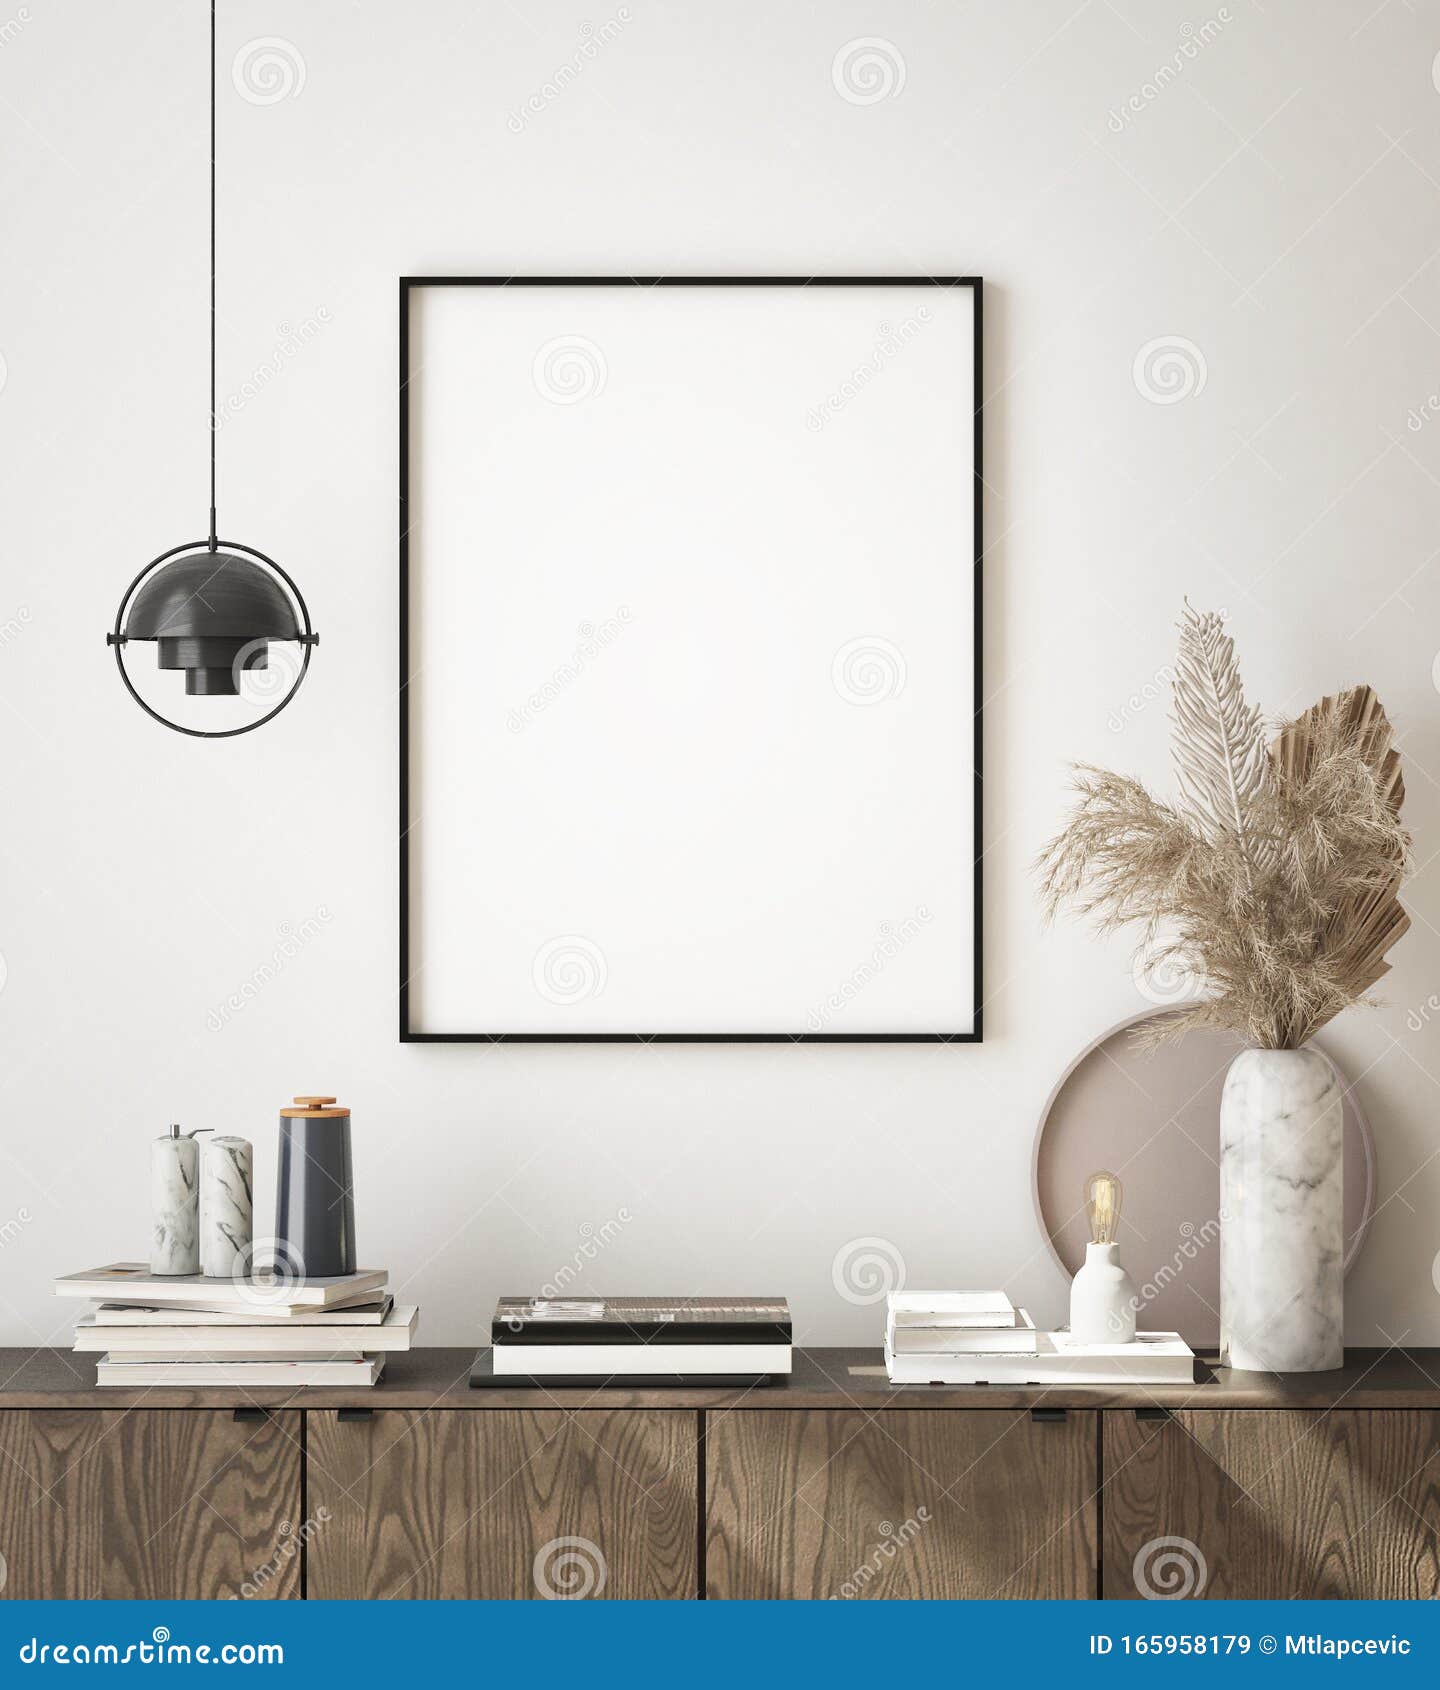 mock up poster frame in modern interior background, living room, scandinavian style, 3d render